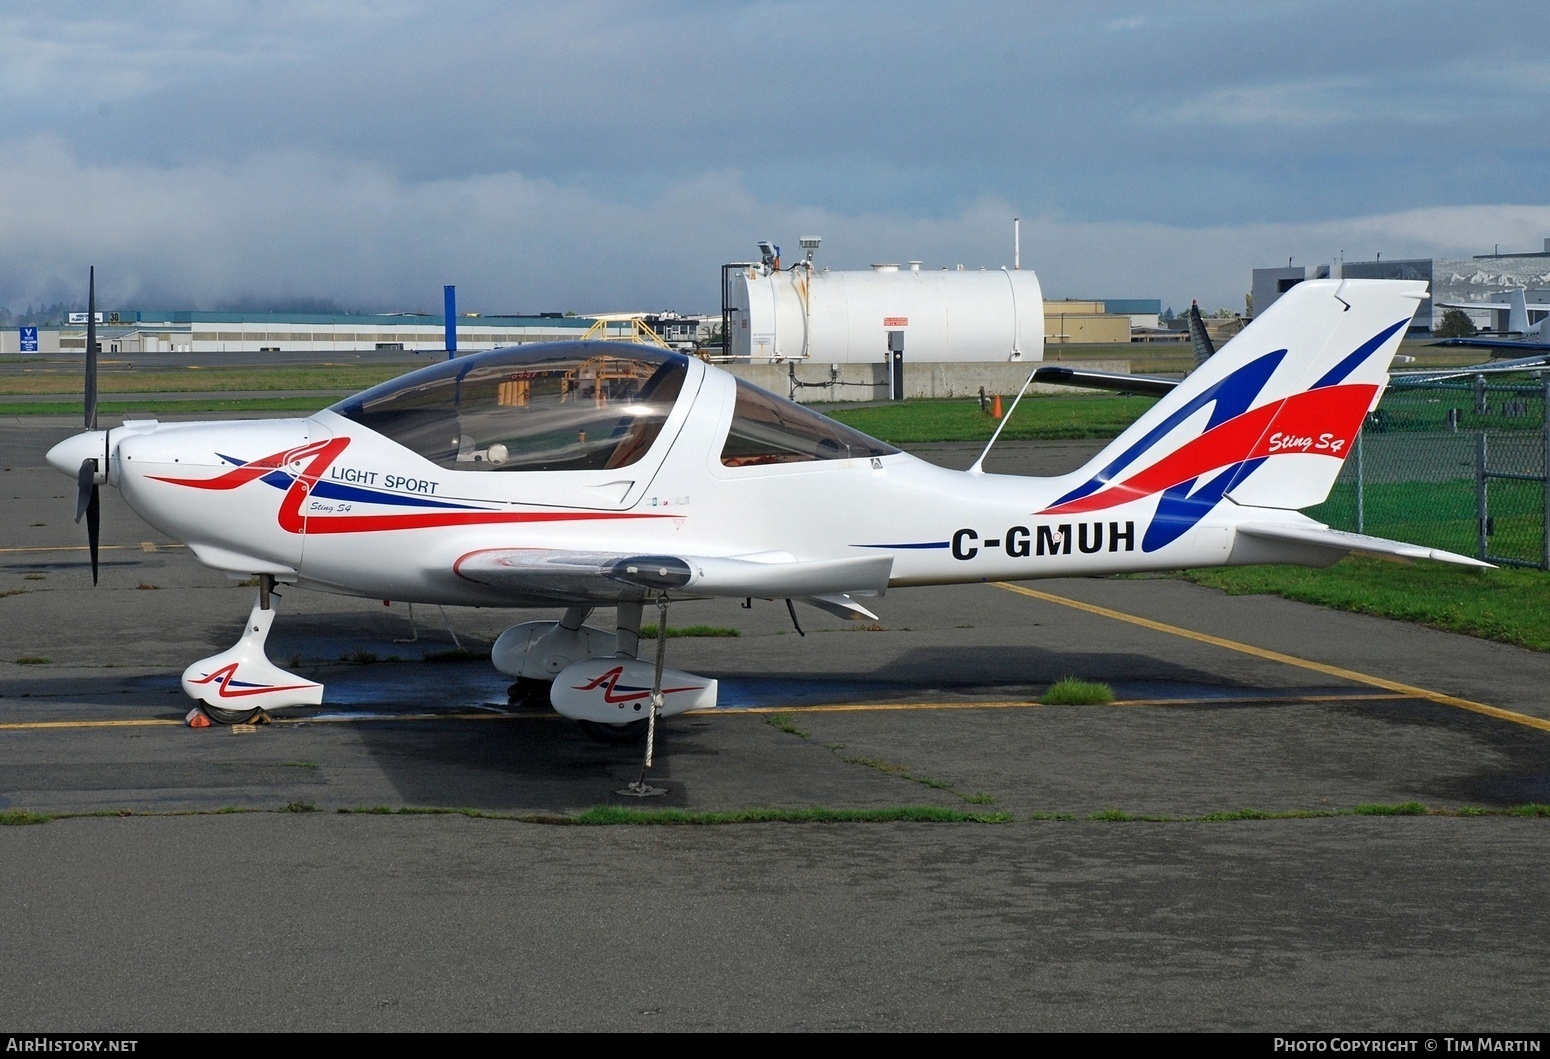 Aircraft Photo of C-GMUH, TL-Ultralight TL-2000 Sting S4